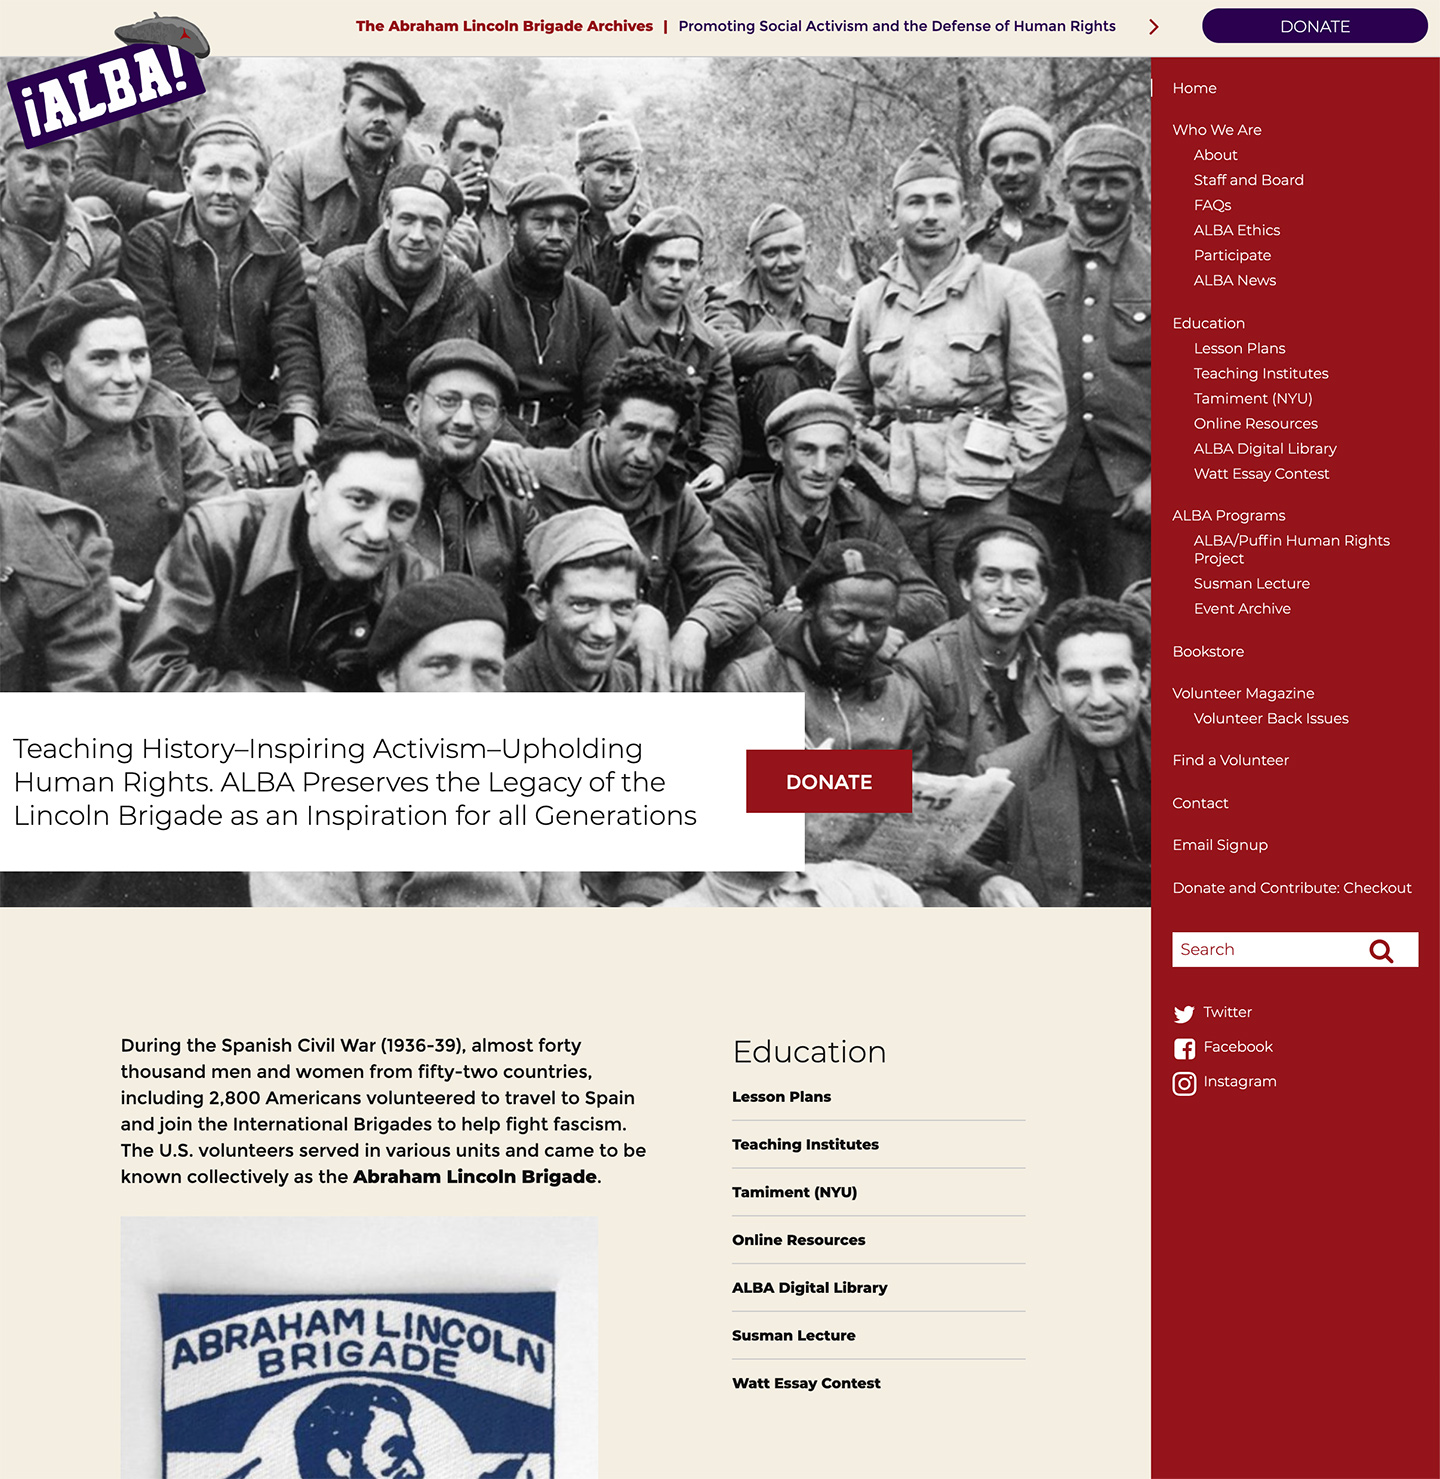 A future-facing overhaul for the Abraham Lincoln Brigade Archives (ALBA)